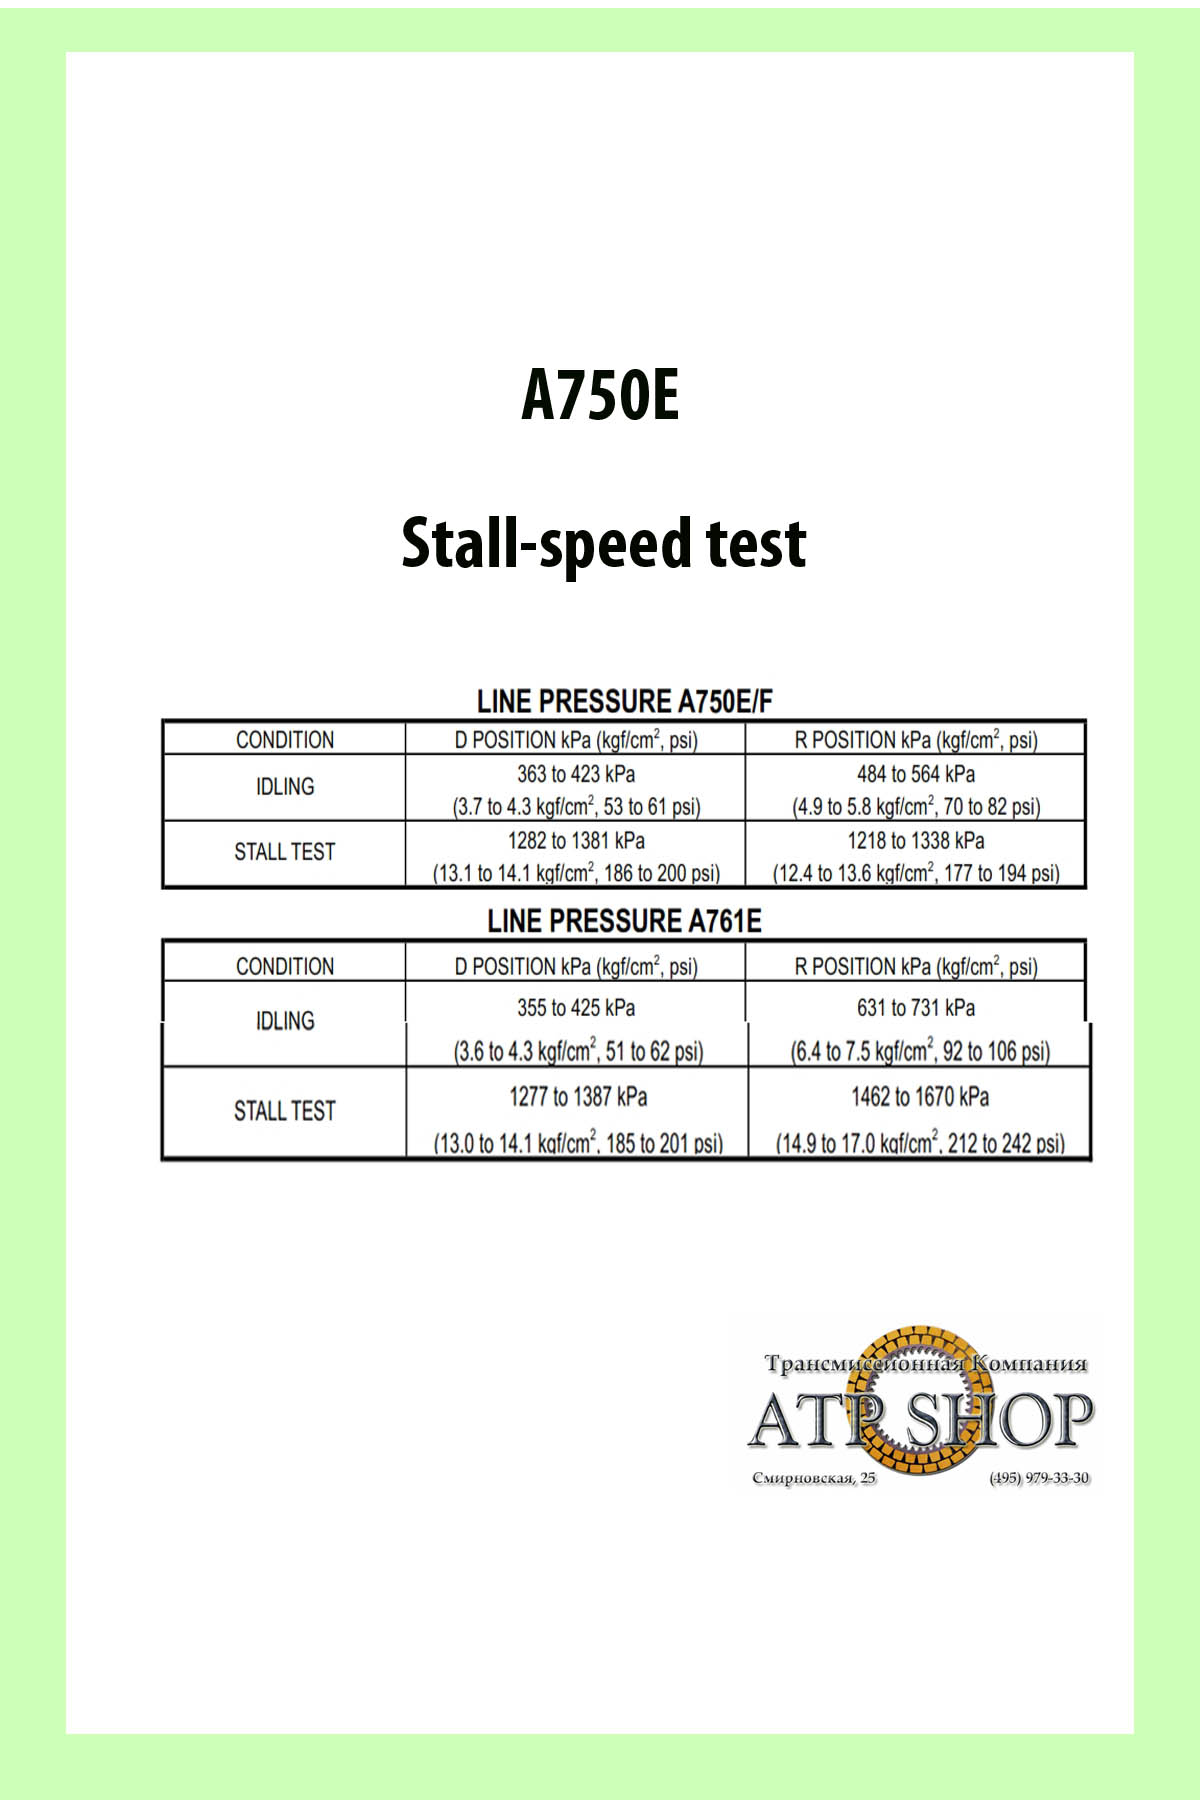 Stall-speed test